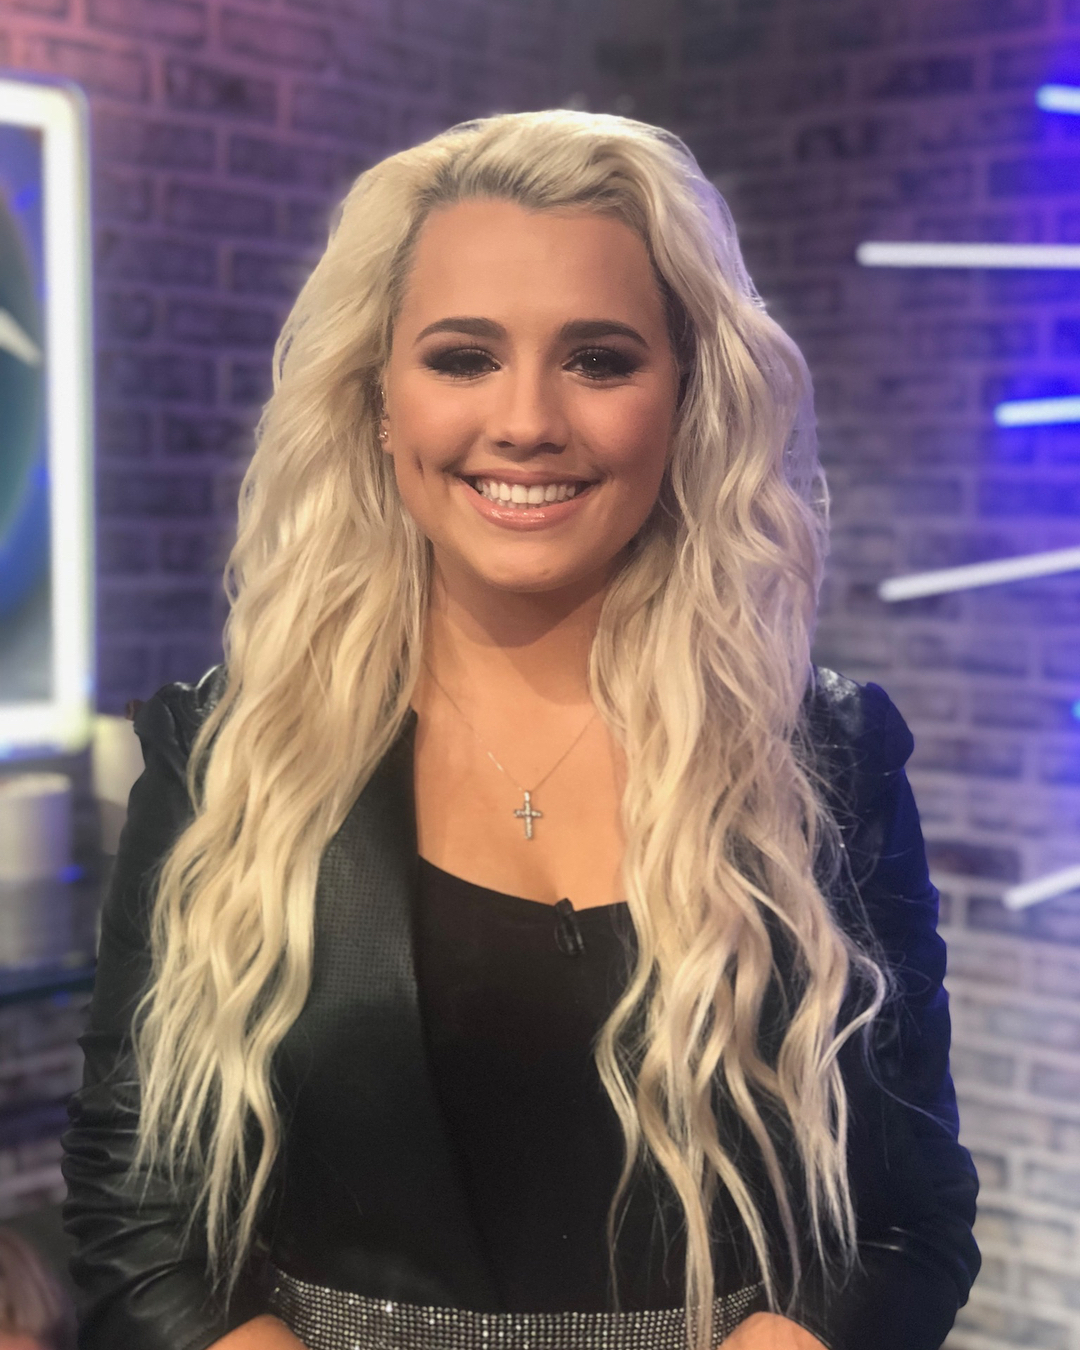 Gabby Barrett backstage at American Idol on May 20, 2018.
Photo credit: Dean Banowetz
